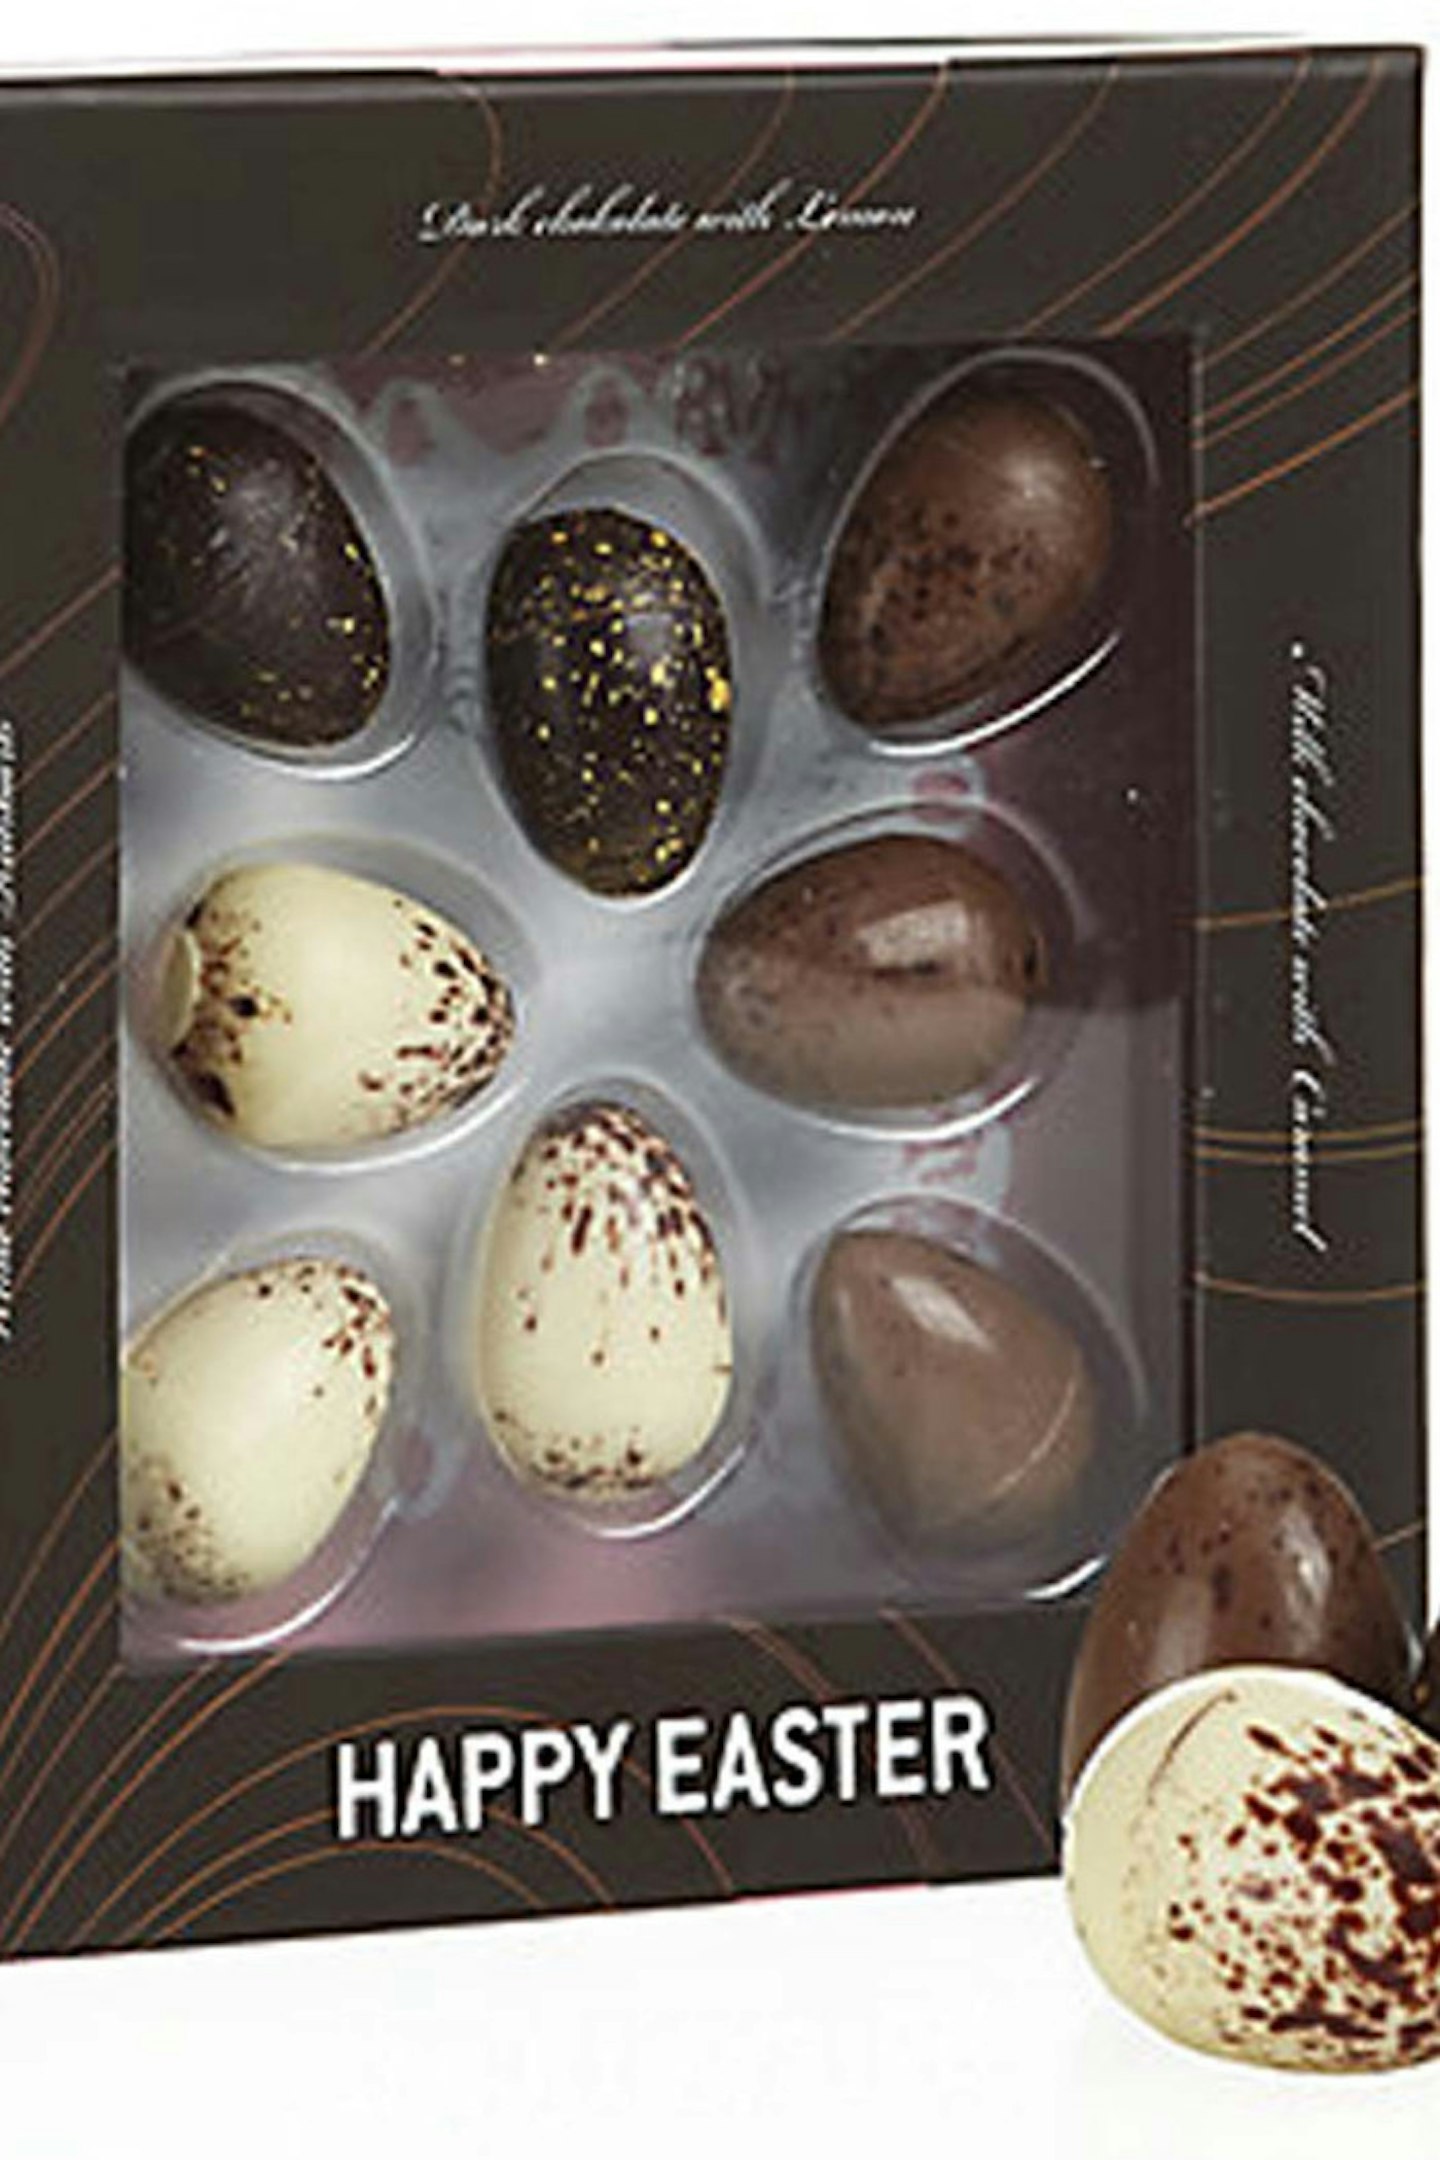 Konnerup Happy Easter 8 Ganache Eggs (96g)12.95 Harrids